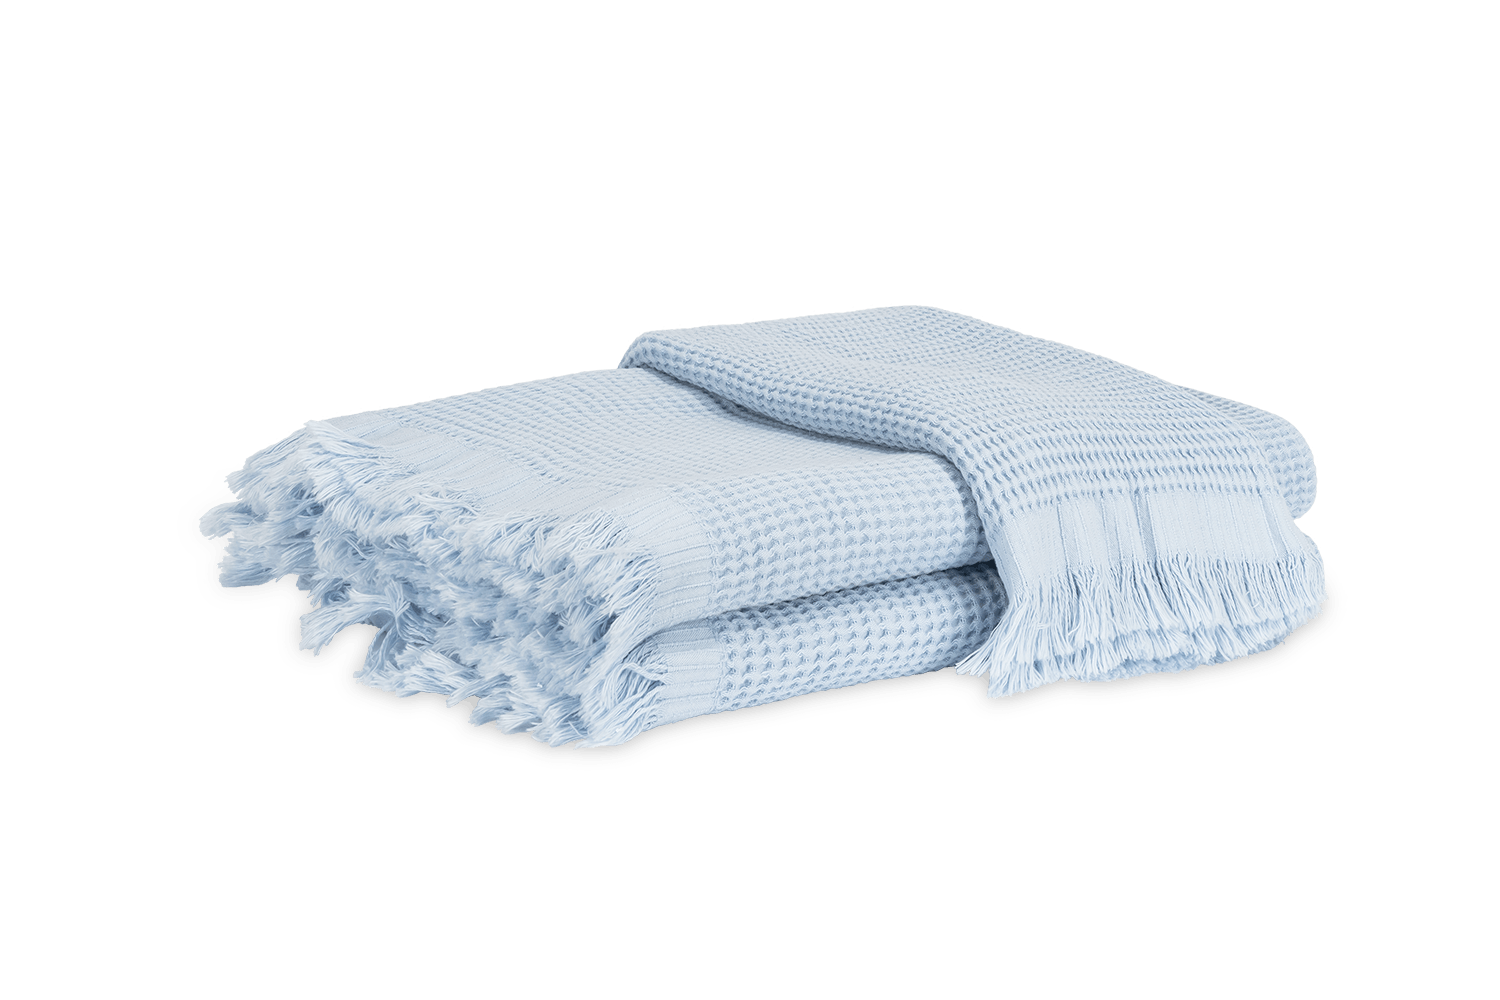 Matouk Kiran Waffle Hand Towel - White